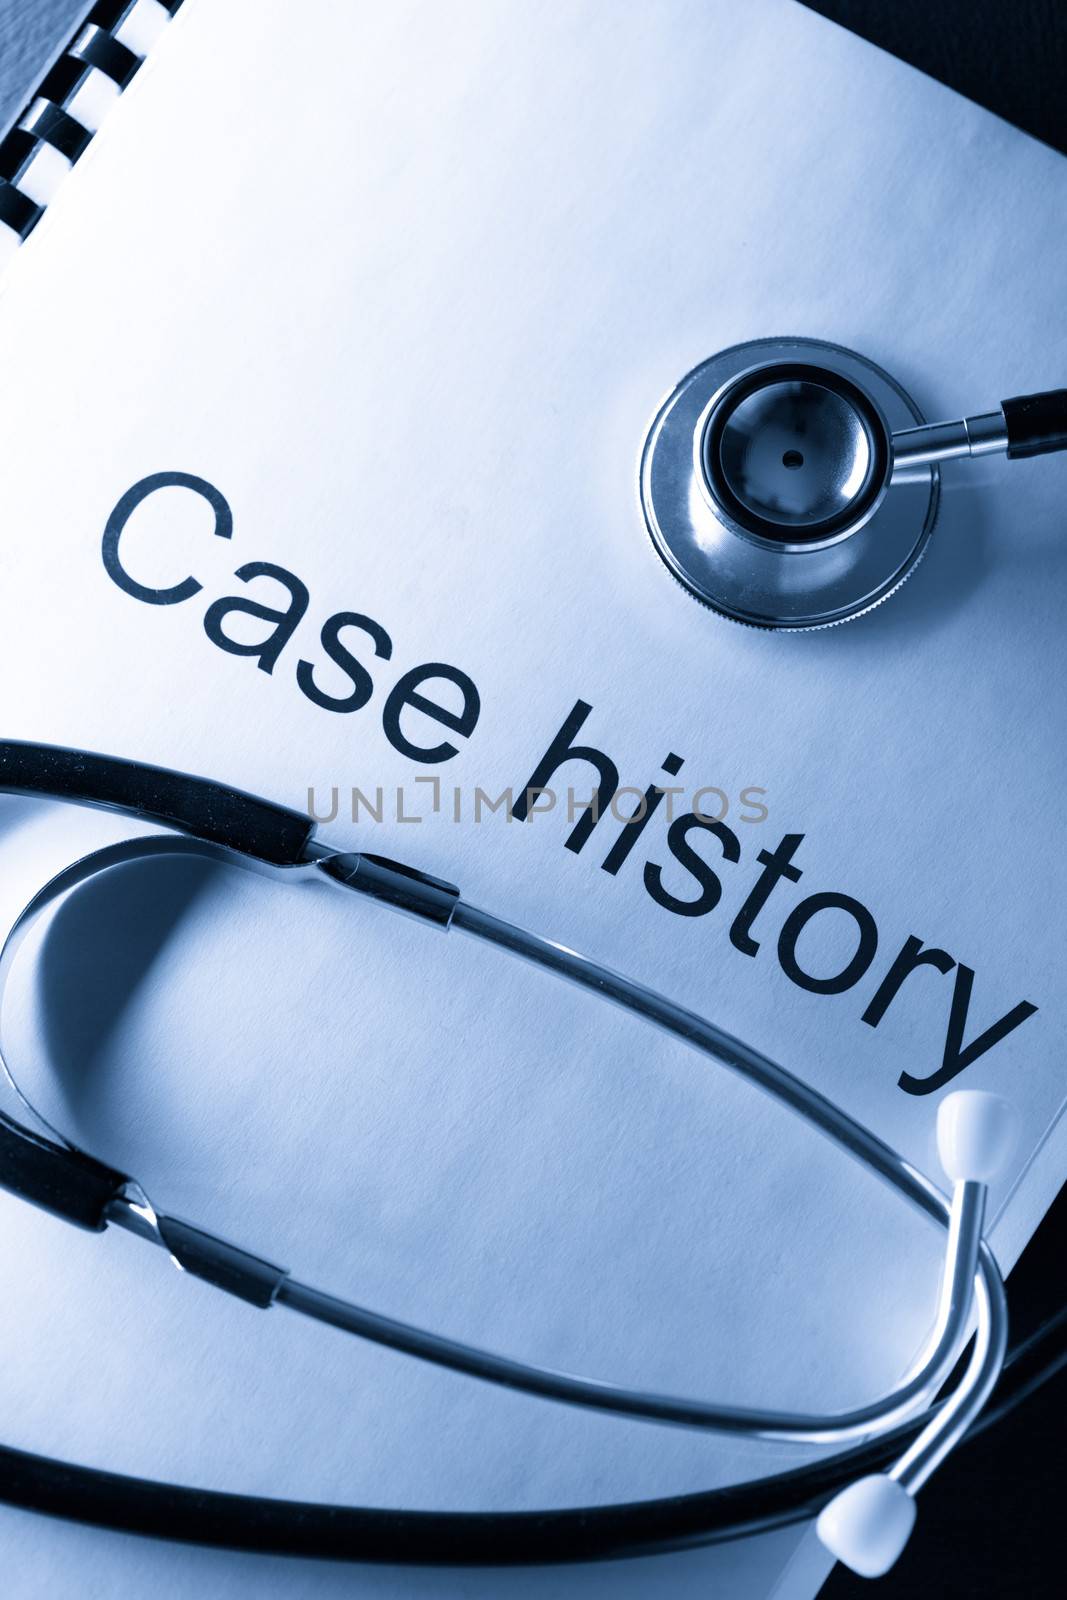 Case history and stethoscope on black by Garsya